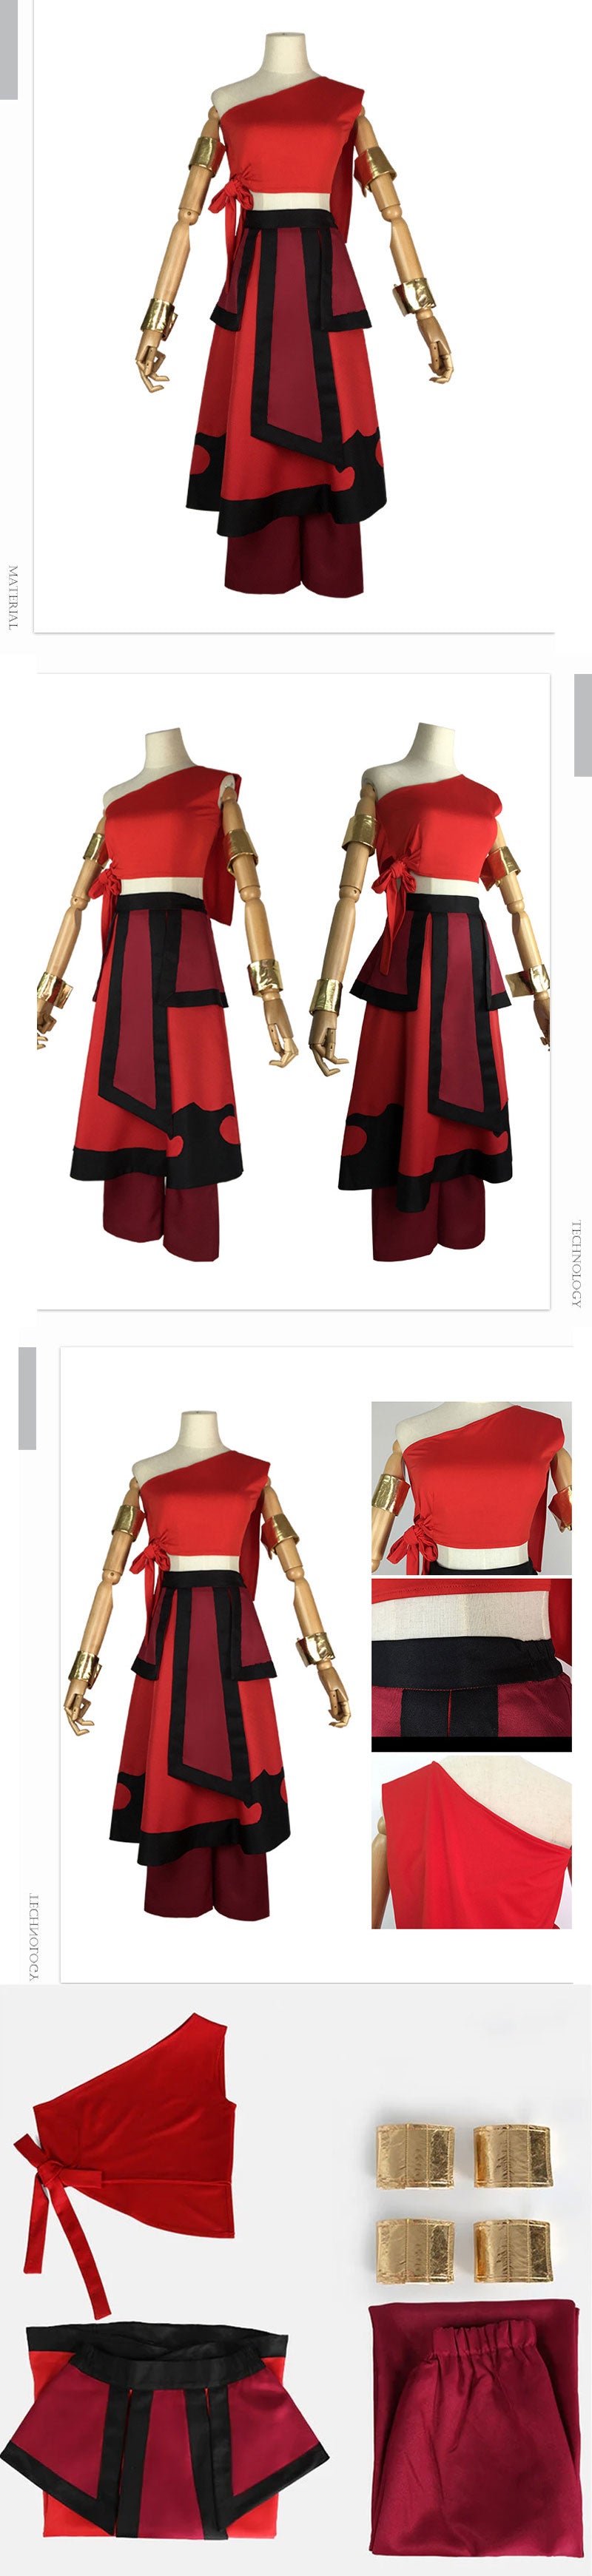 Avatar: The Last Airbender Katara Red Dress Cosplay Costume